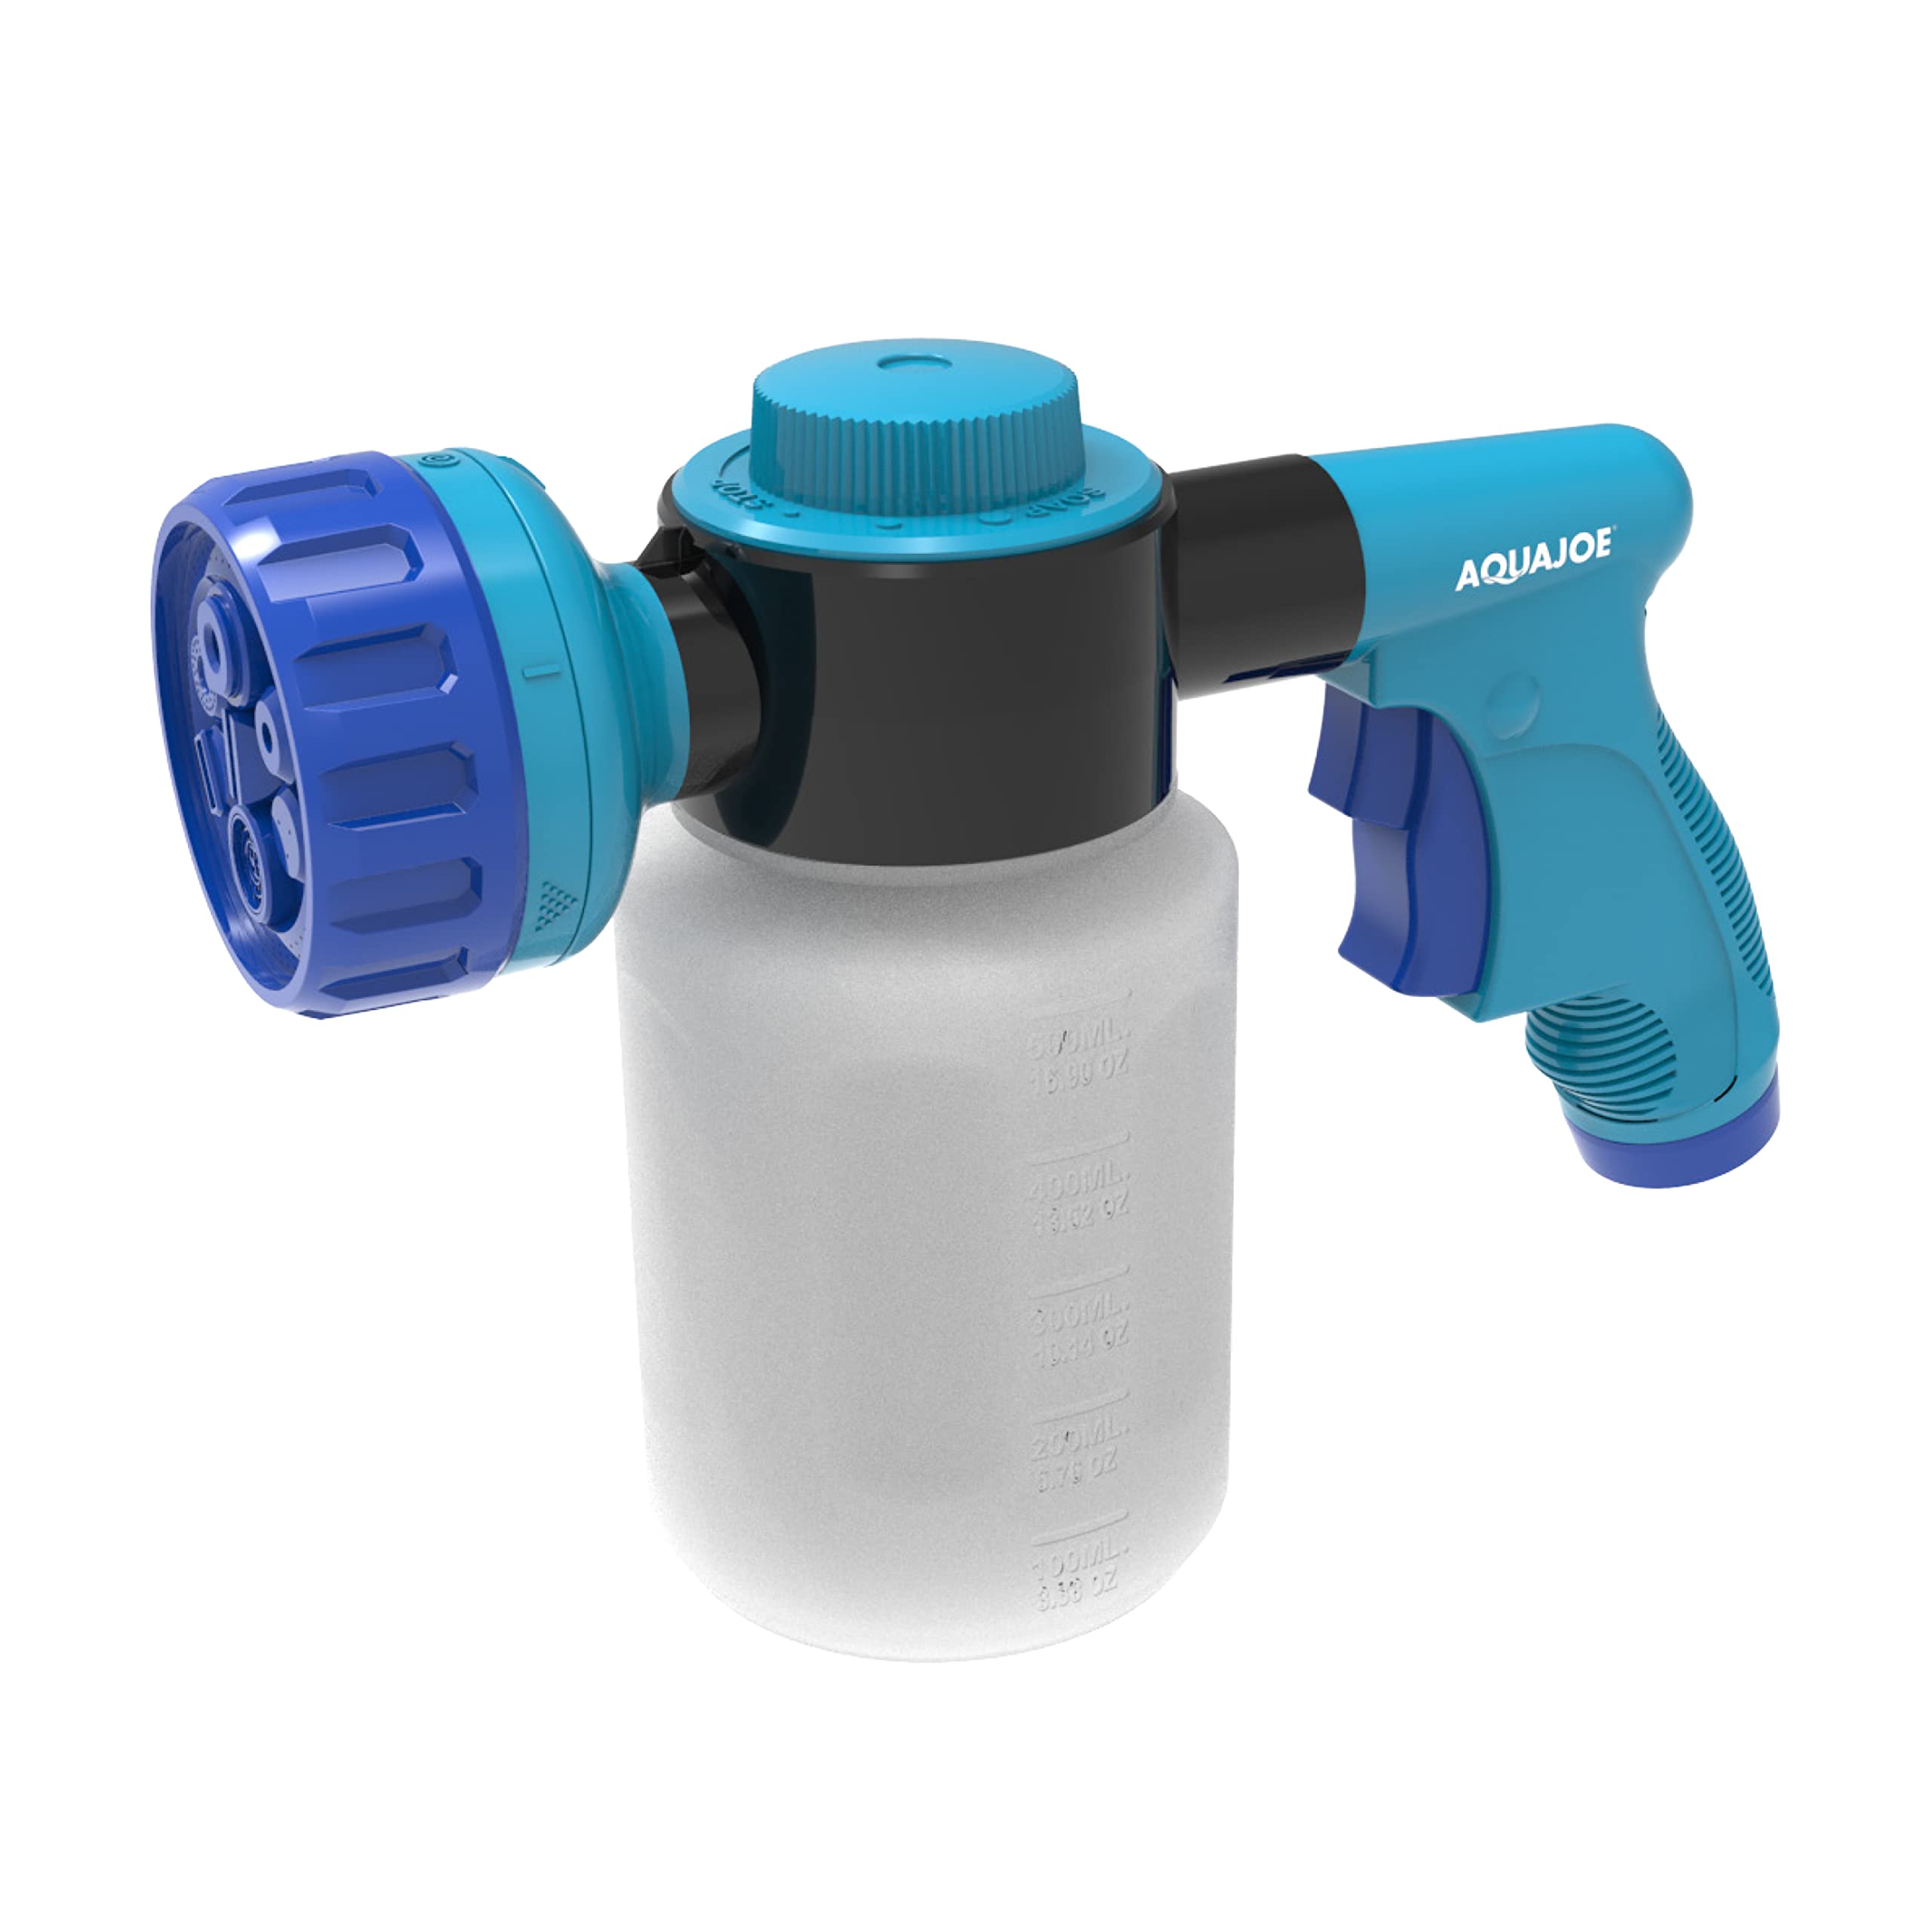 Aqua Joe Hose-Powered Multi-Purpose Spray Gun $14 + Free Shipping w/ Prime or on $35+